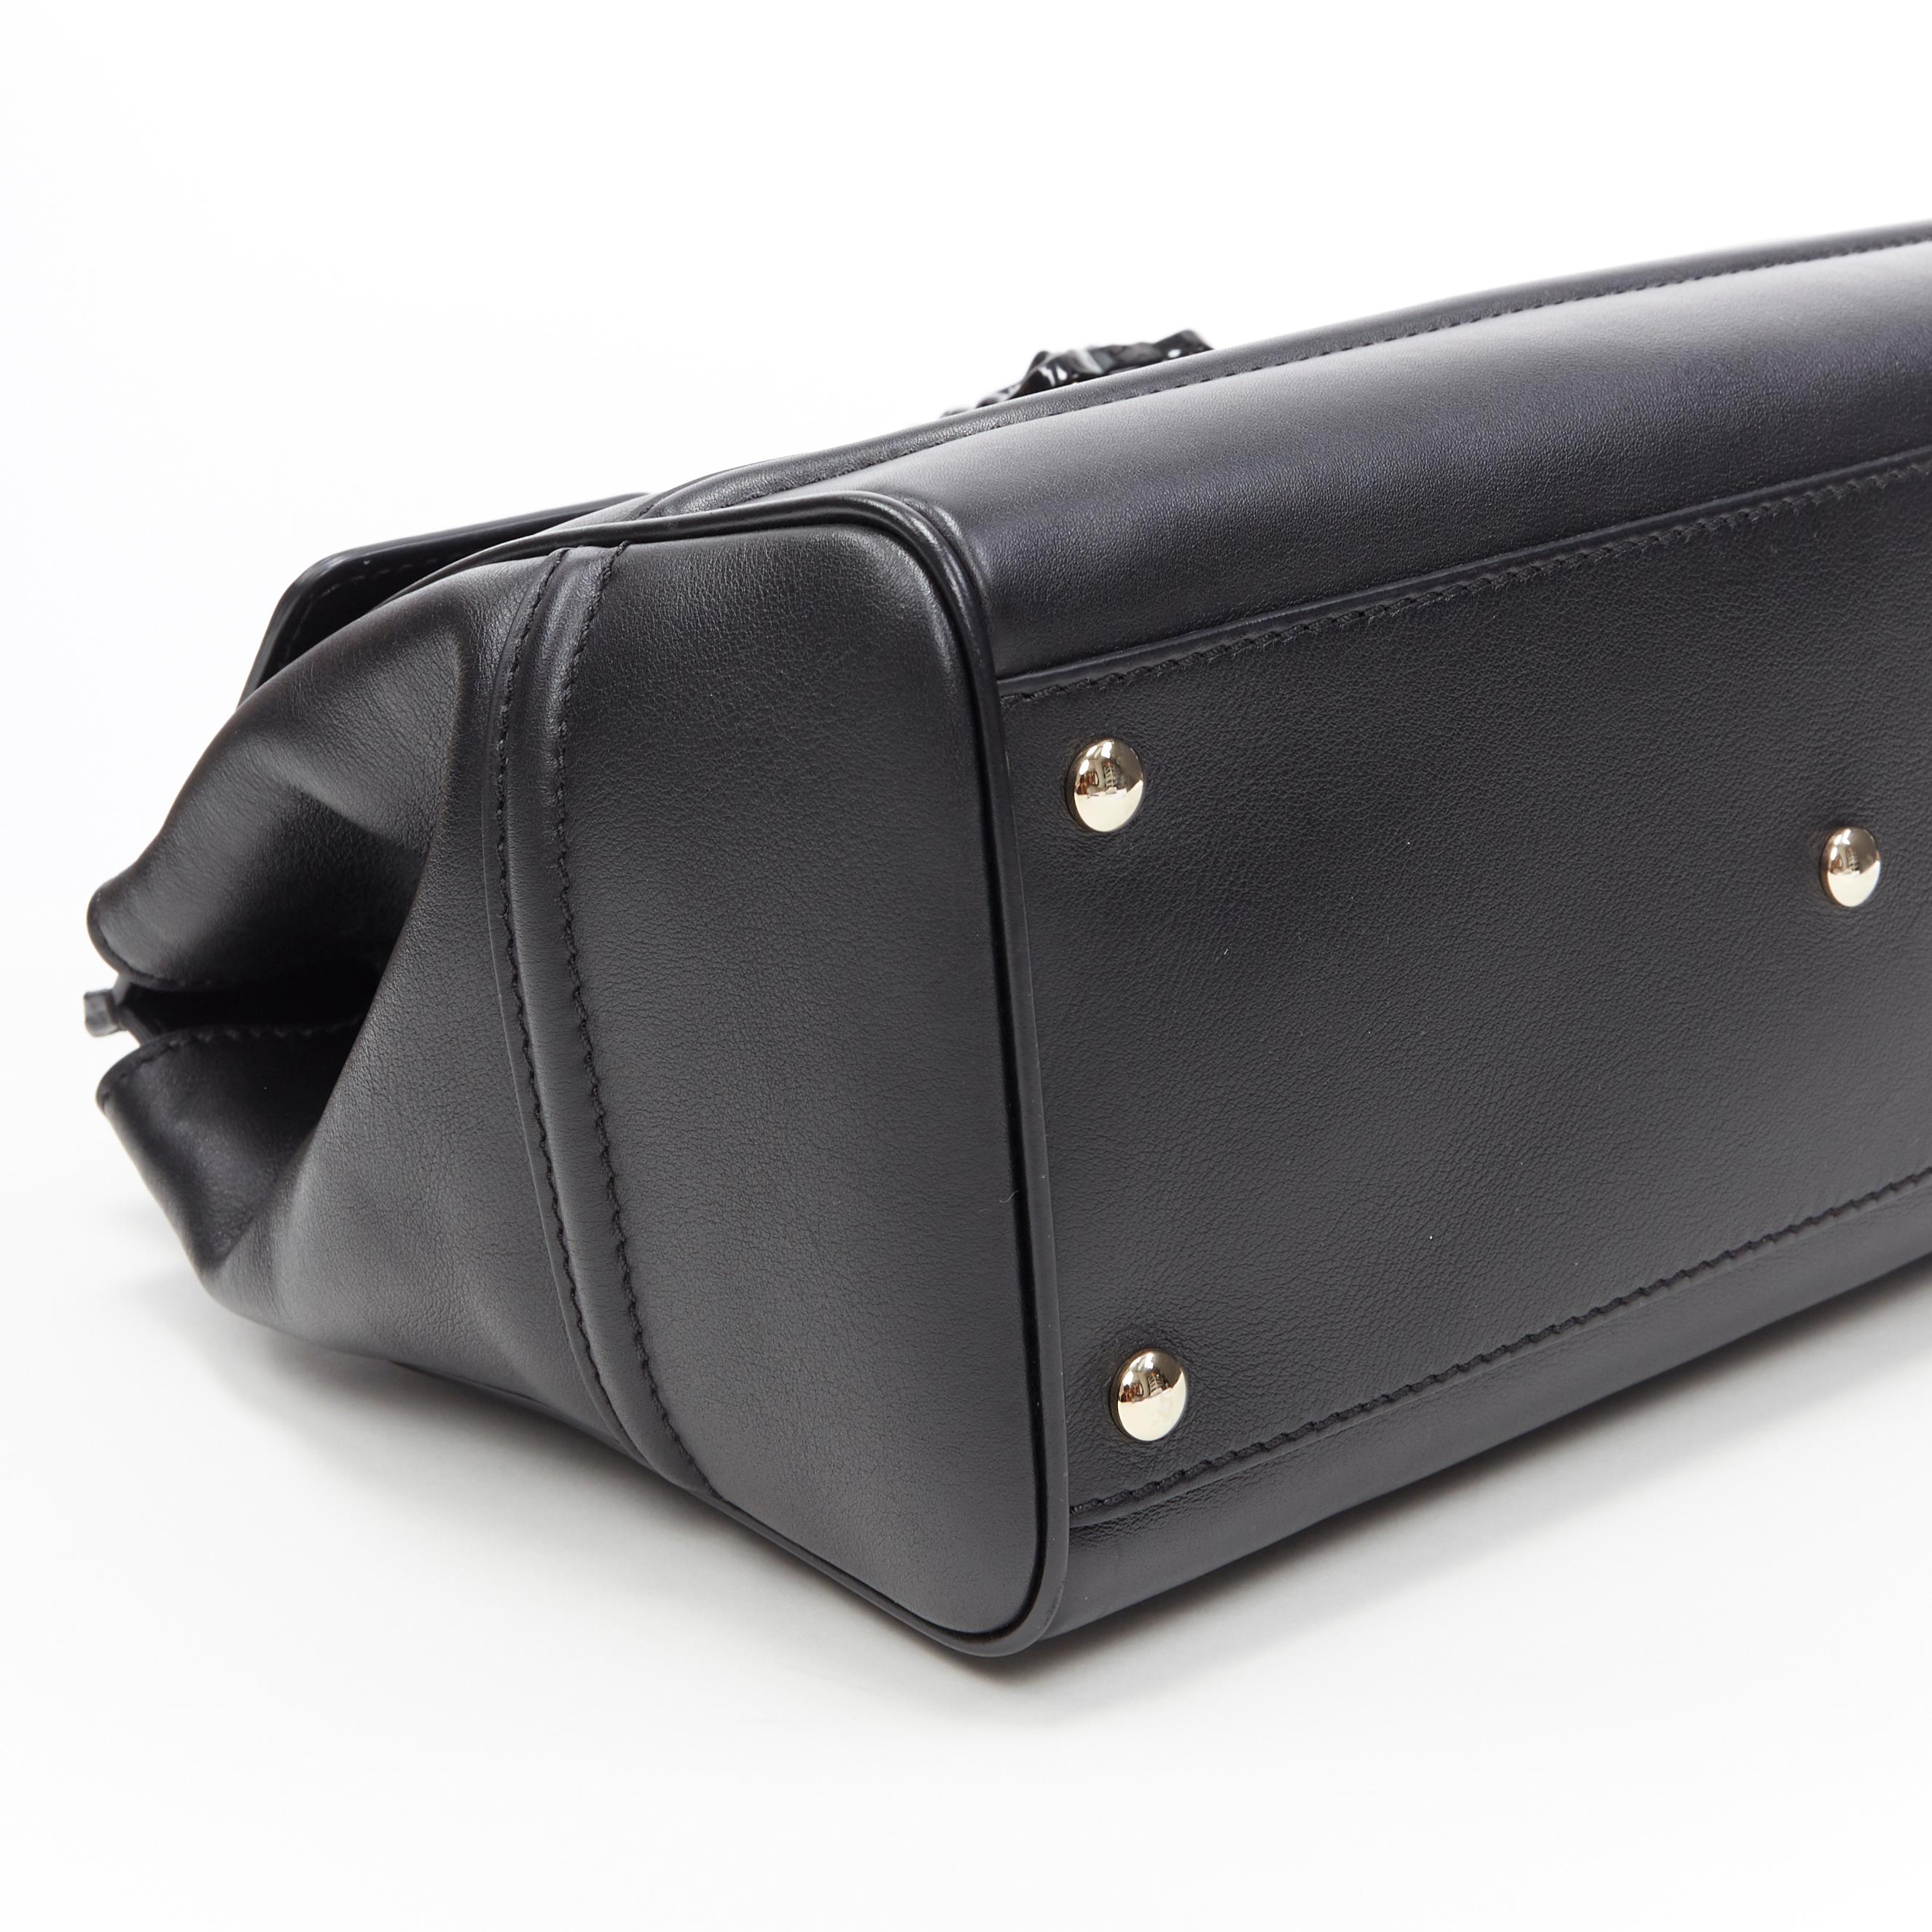 new VERSACE Palazzo Empire Medium classic black calf leather Medusa satchel bag 4